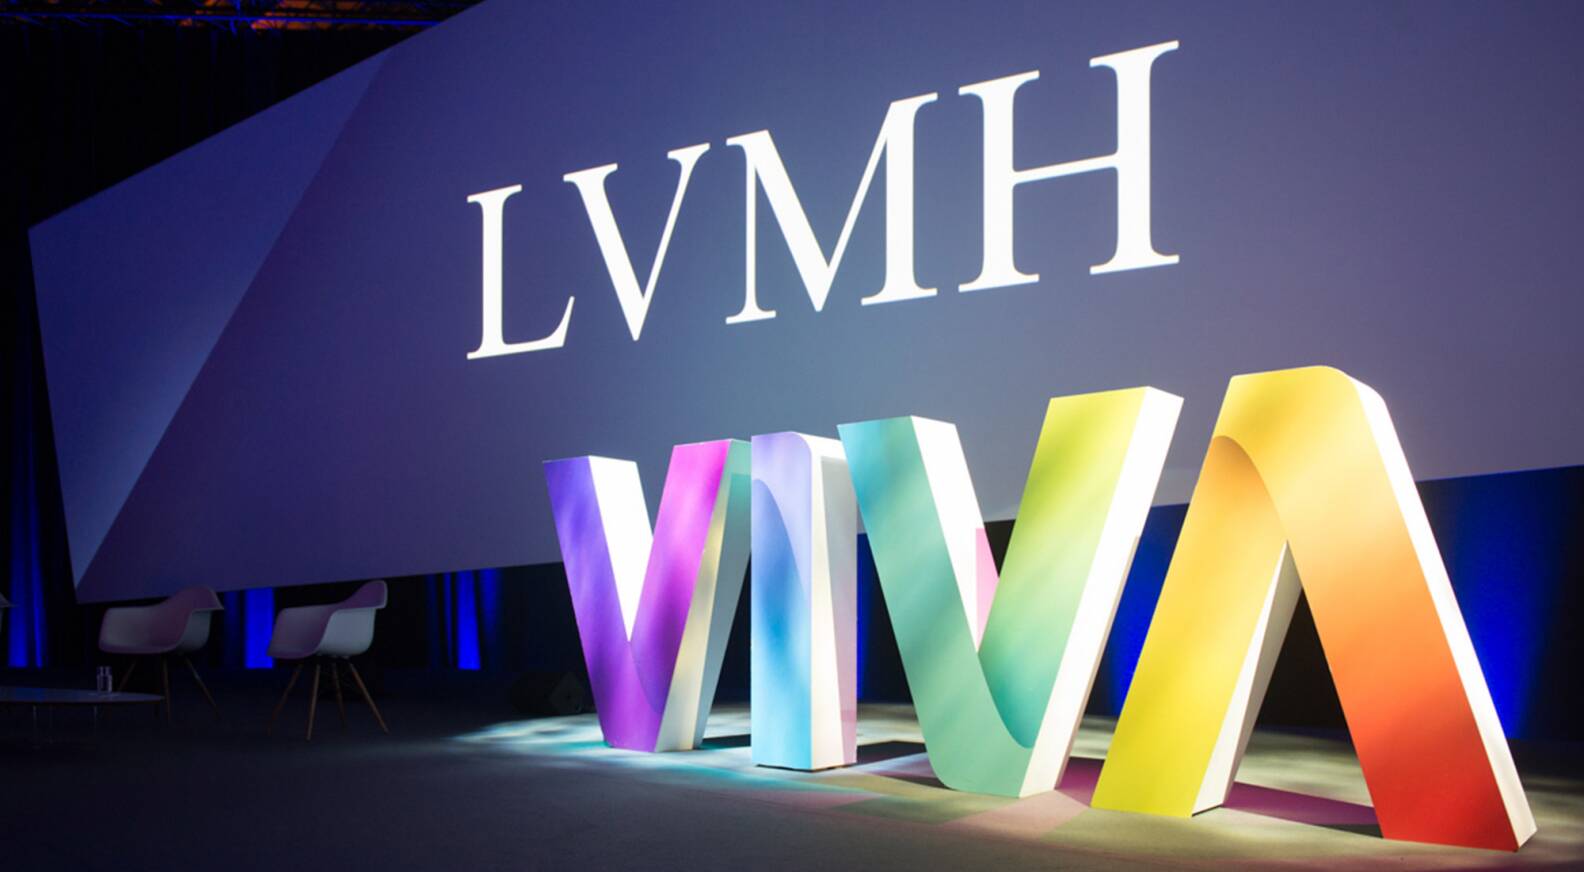 LVMH at Vivatech: Championing 